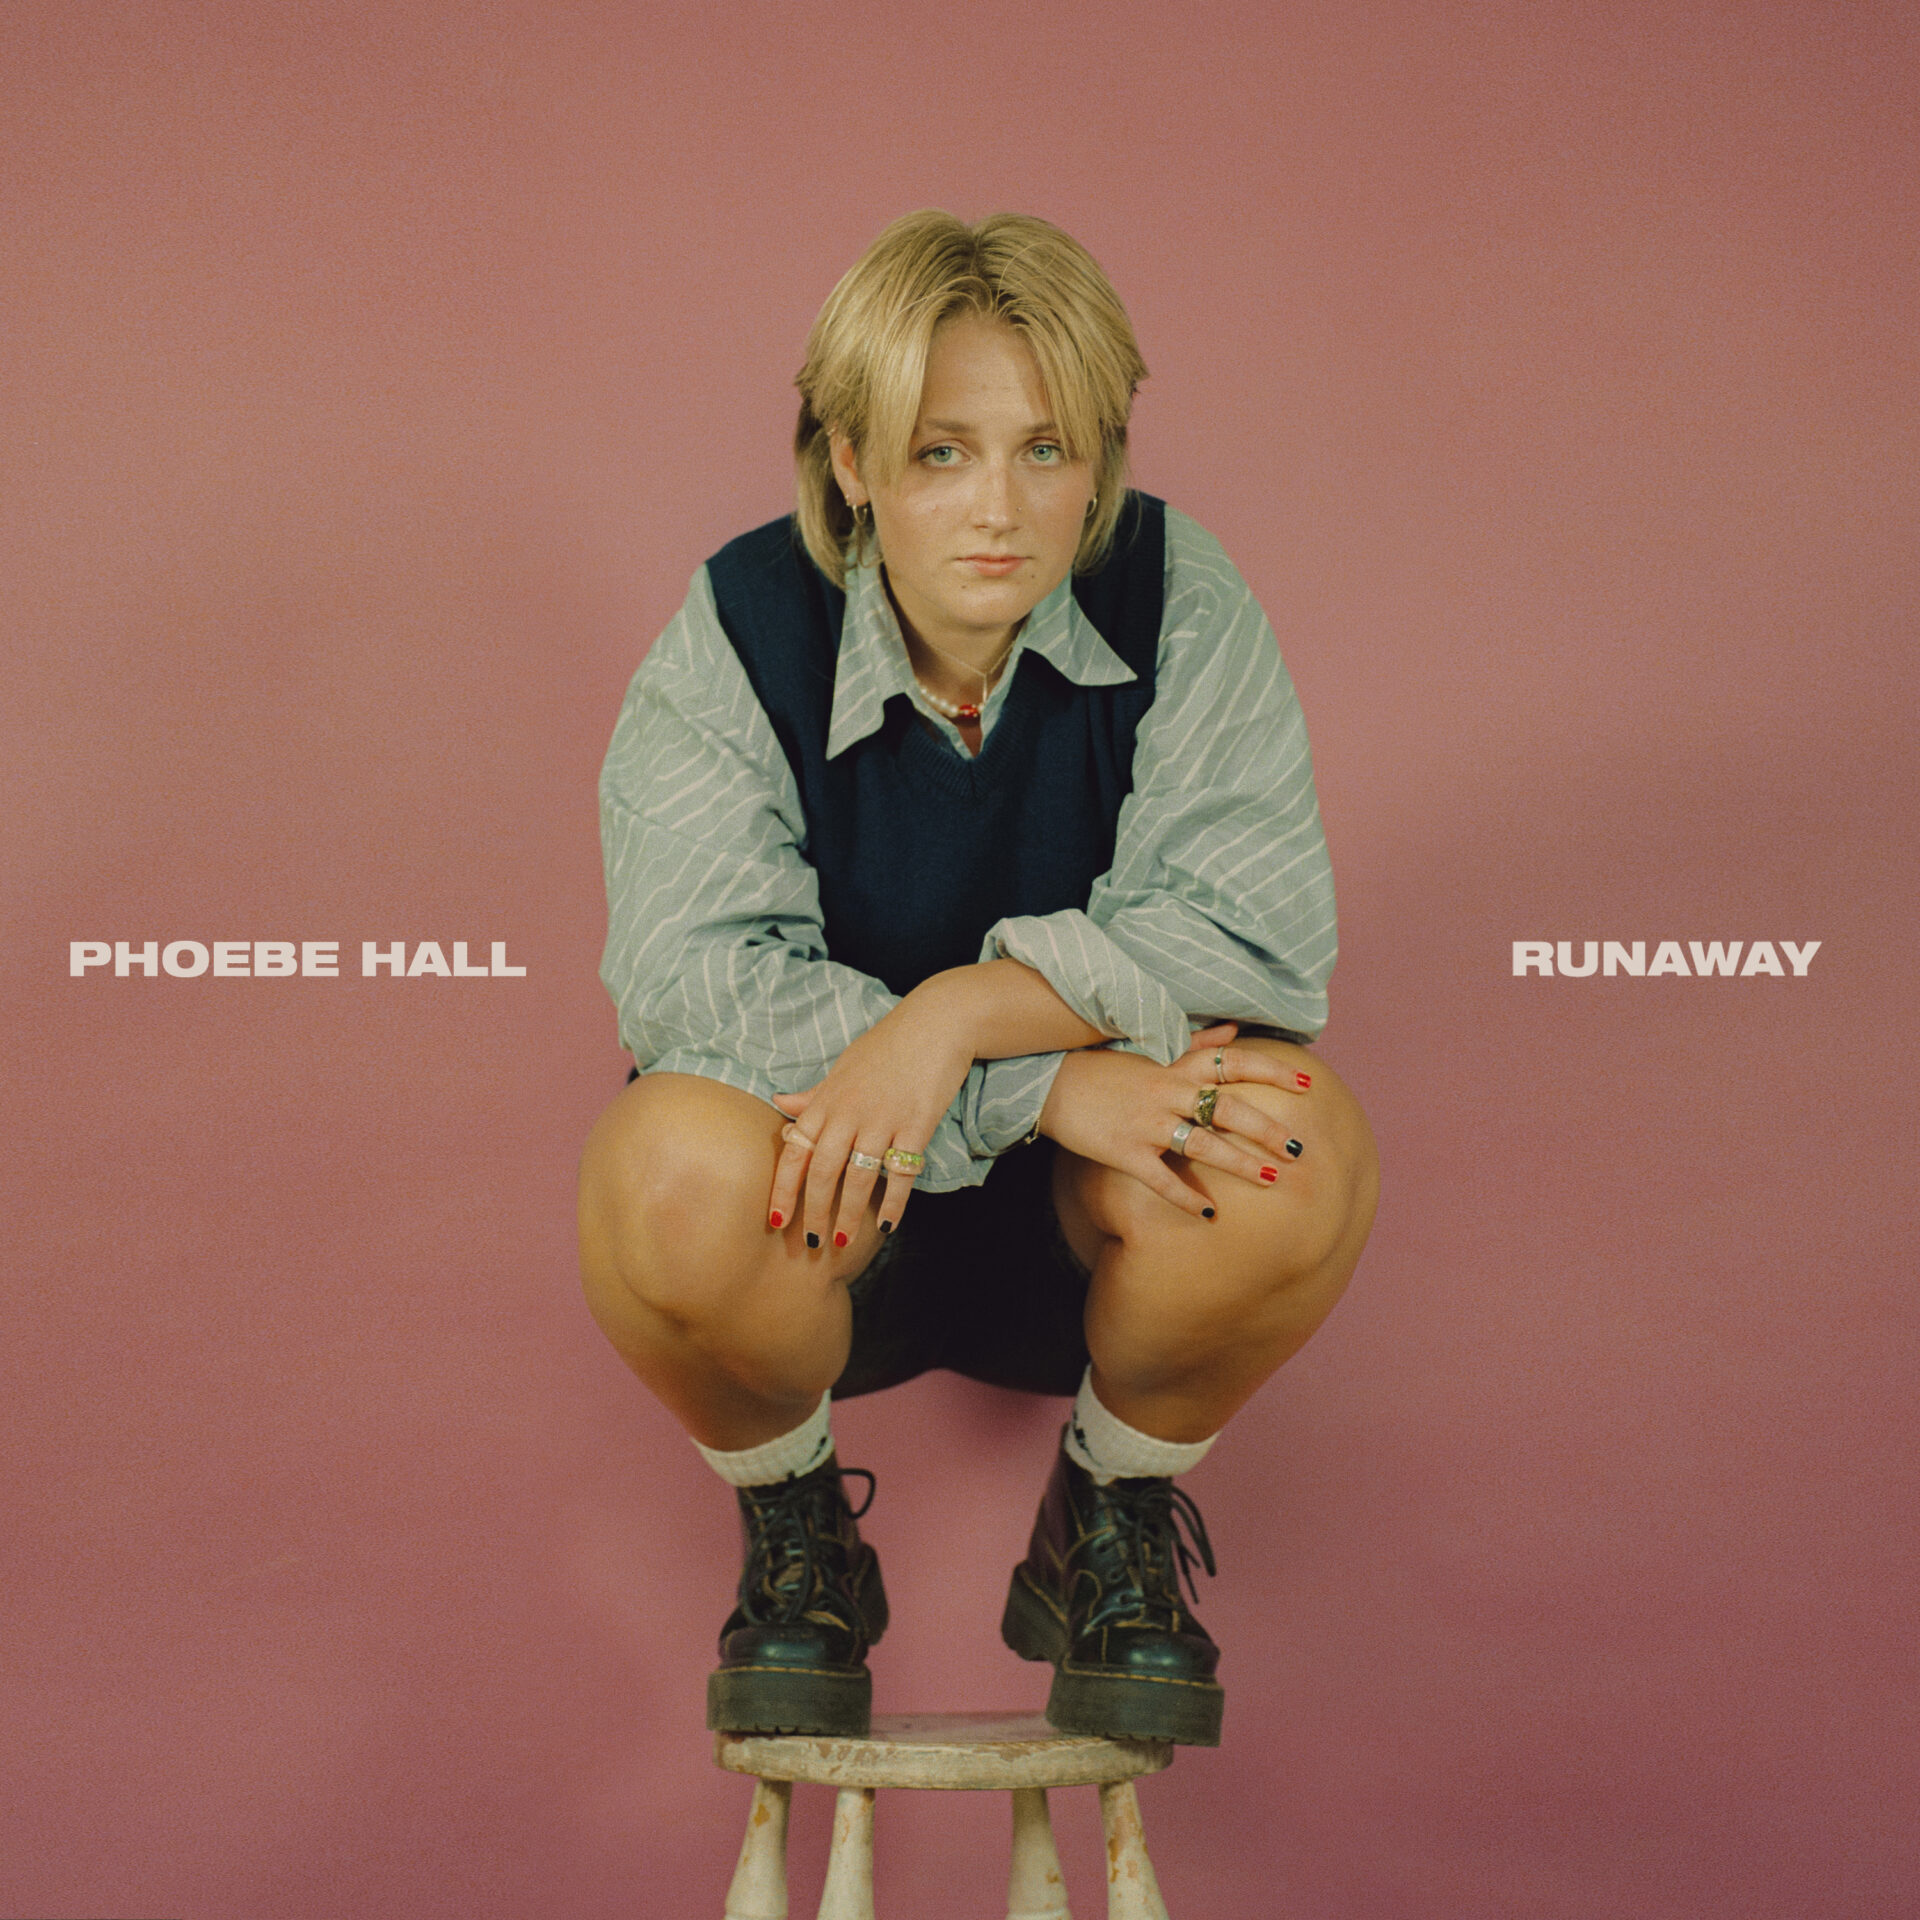 NEWS: Phoebe Hall drops highly anticipated EP 'Runaway'